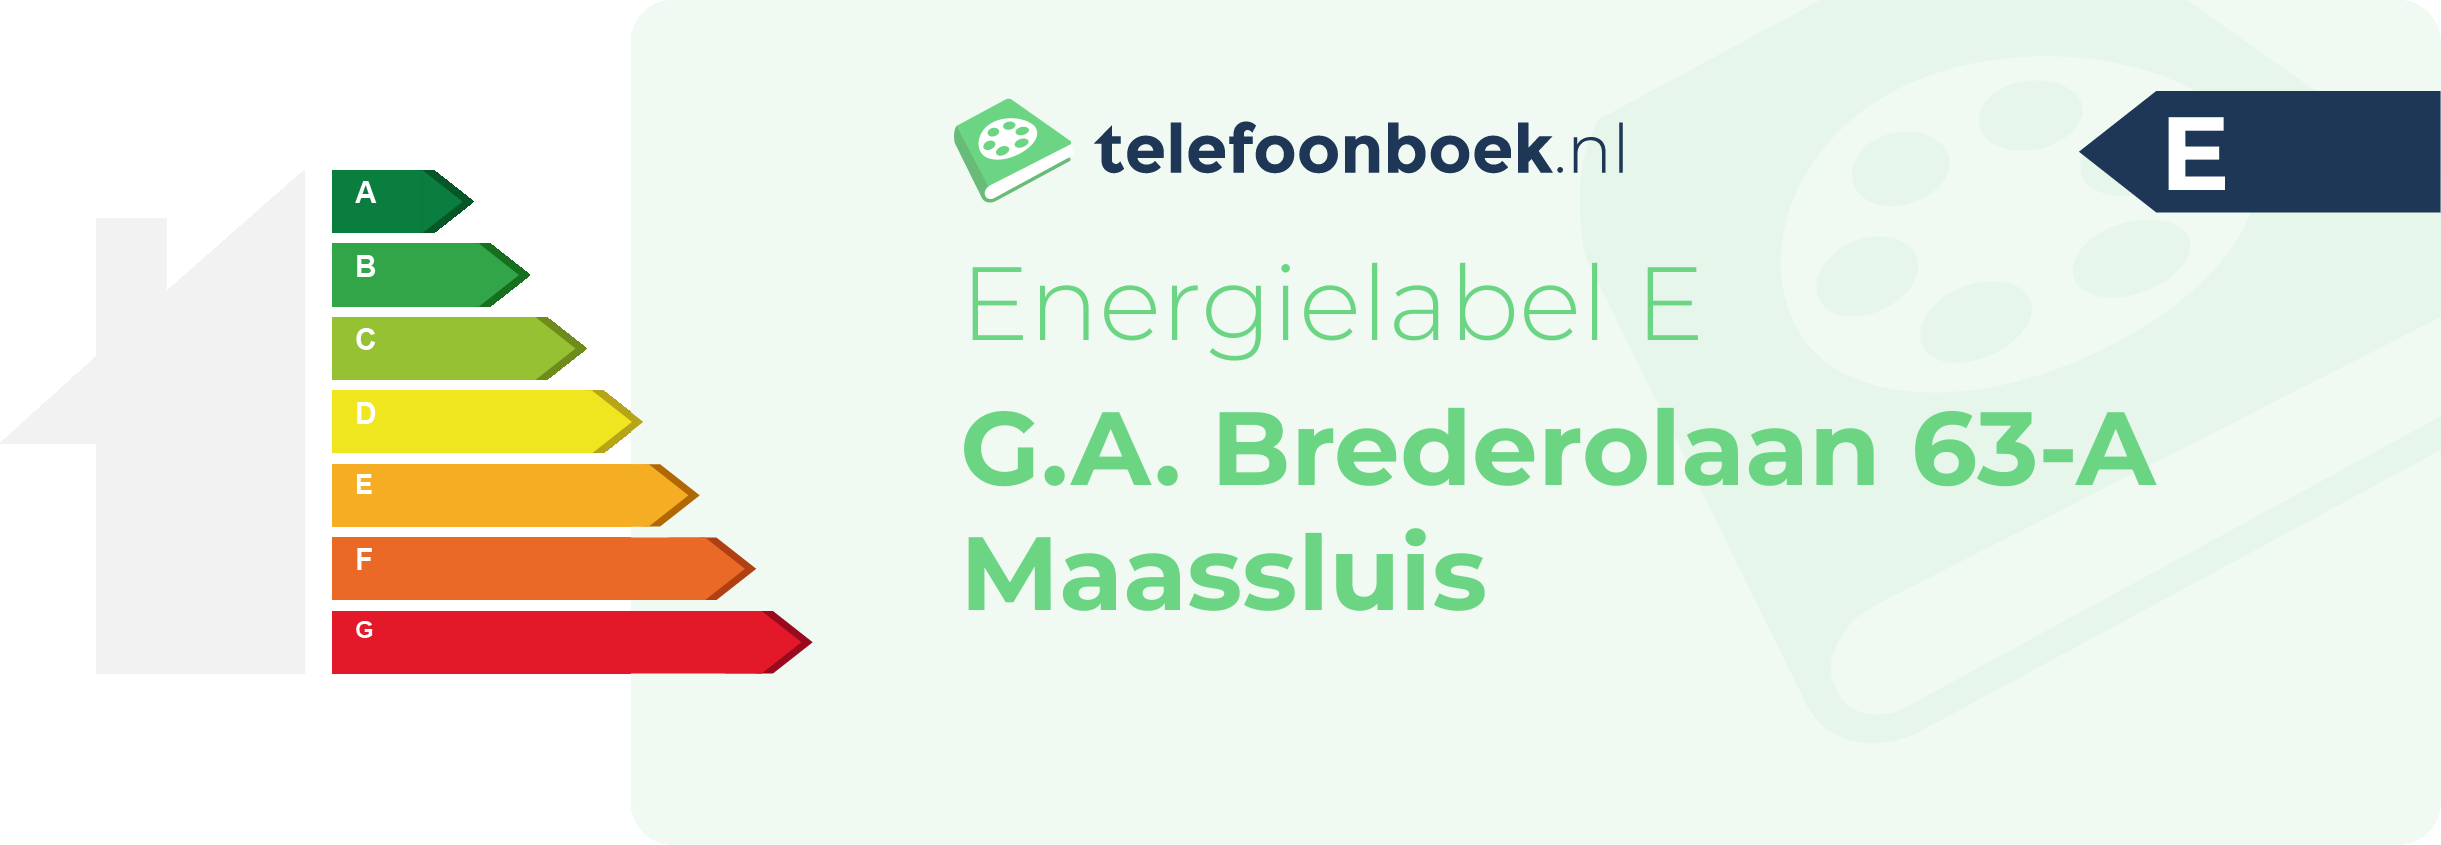 Energielabel G.A. Brederolaan 63-A Maassluis